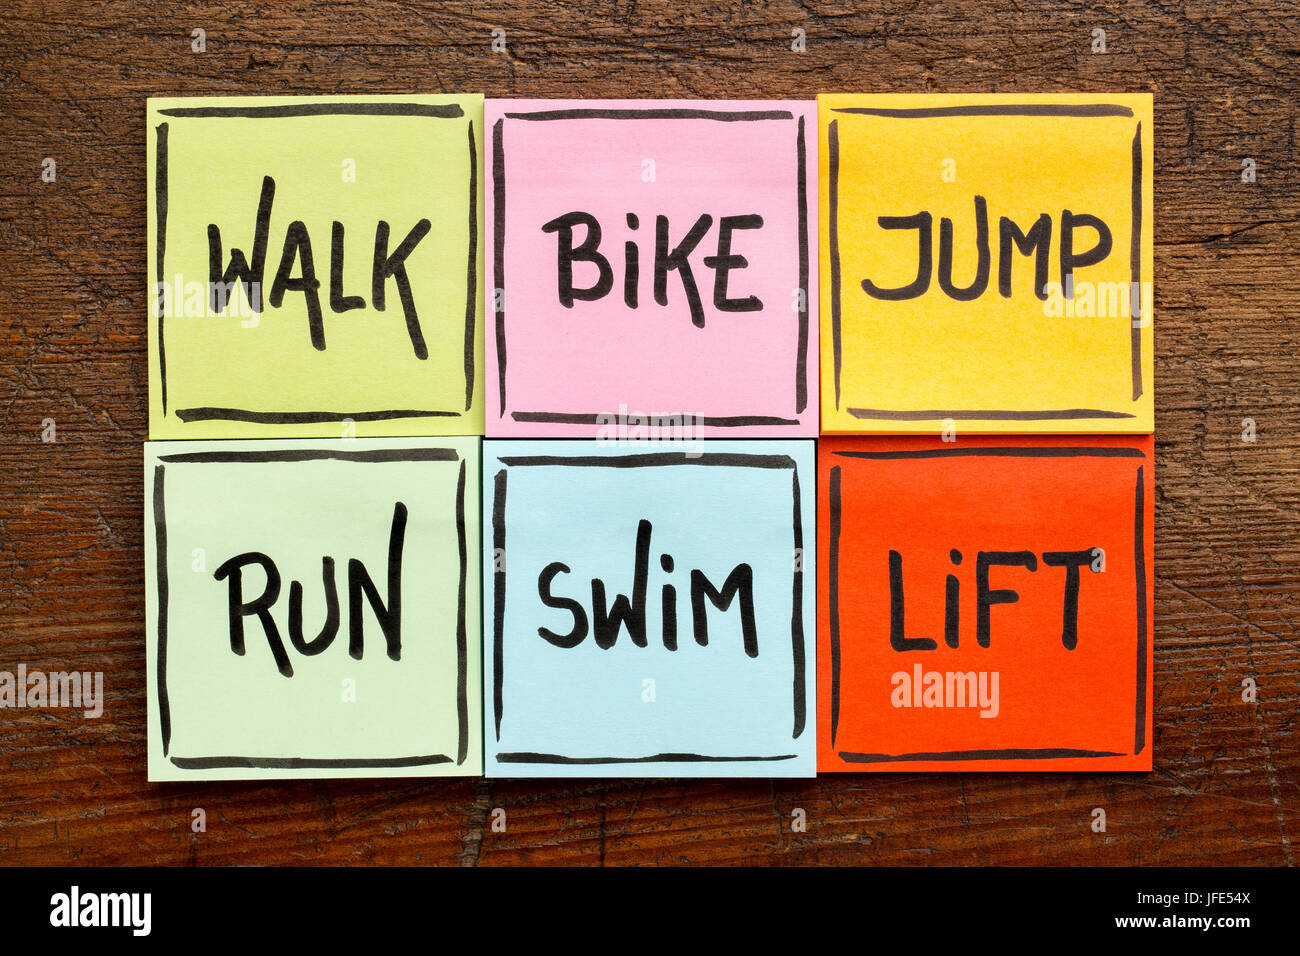 walk, bike, jump, run, swim, life - fitness or cross training concept - handwriting on sticky notes against rustic wood Stock Photo